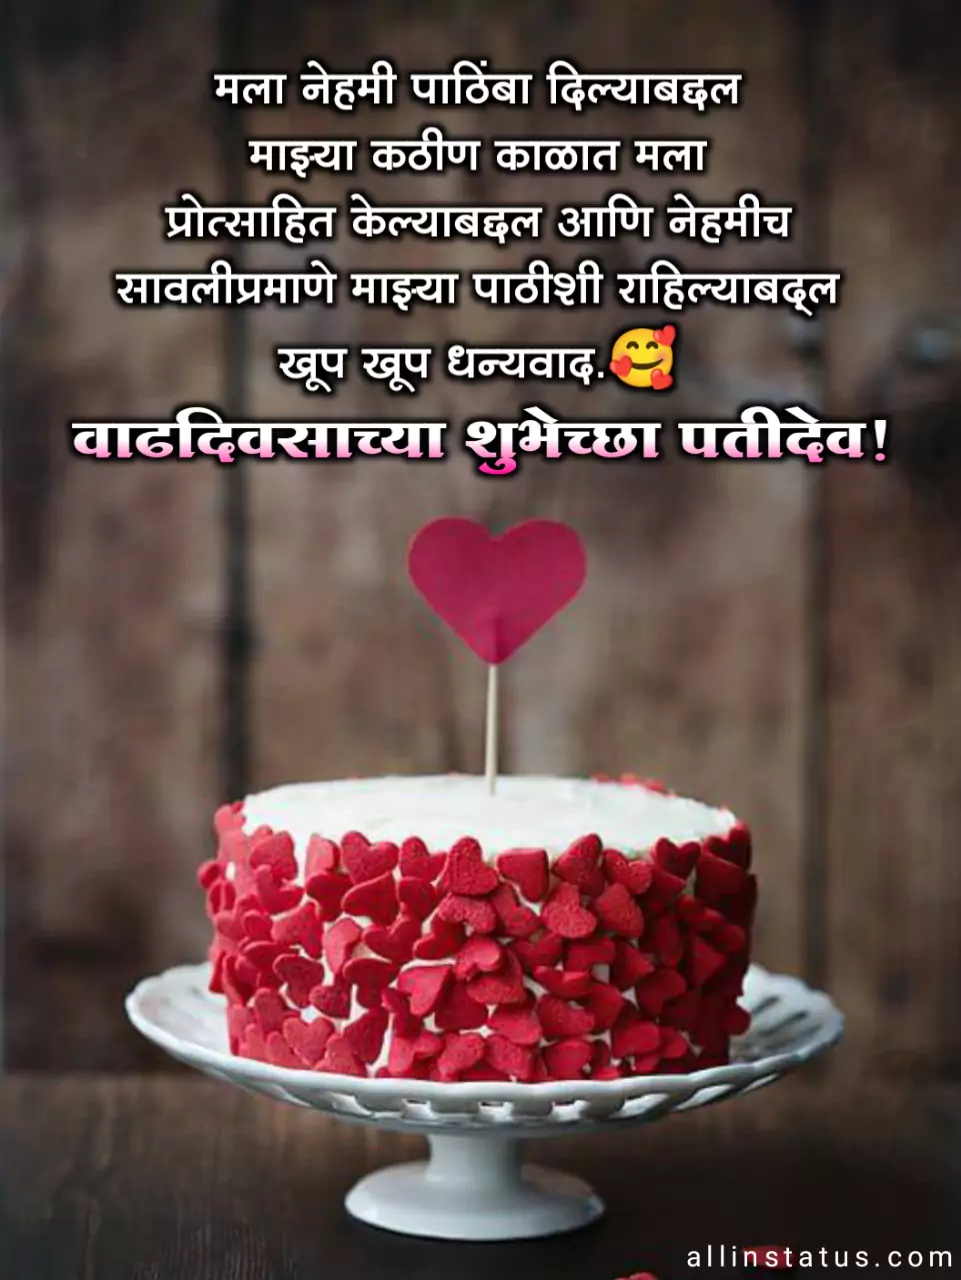 Happy Birthday Status for husband in marathi